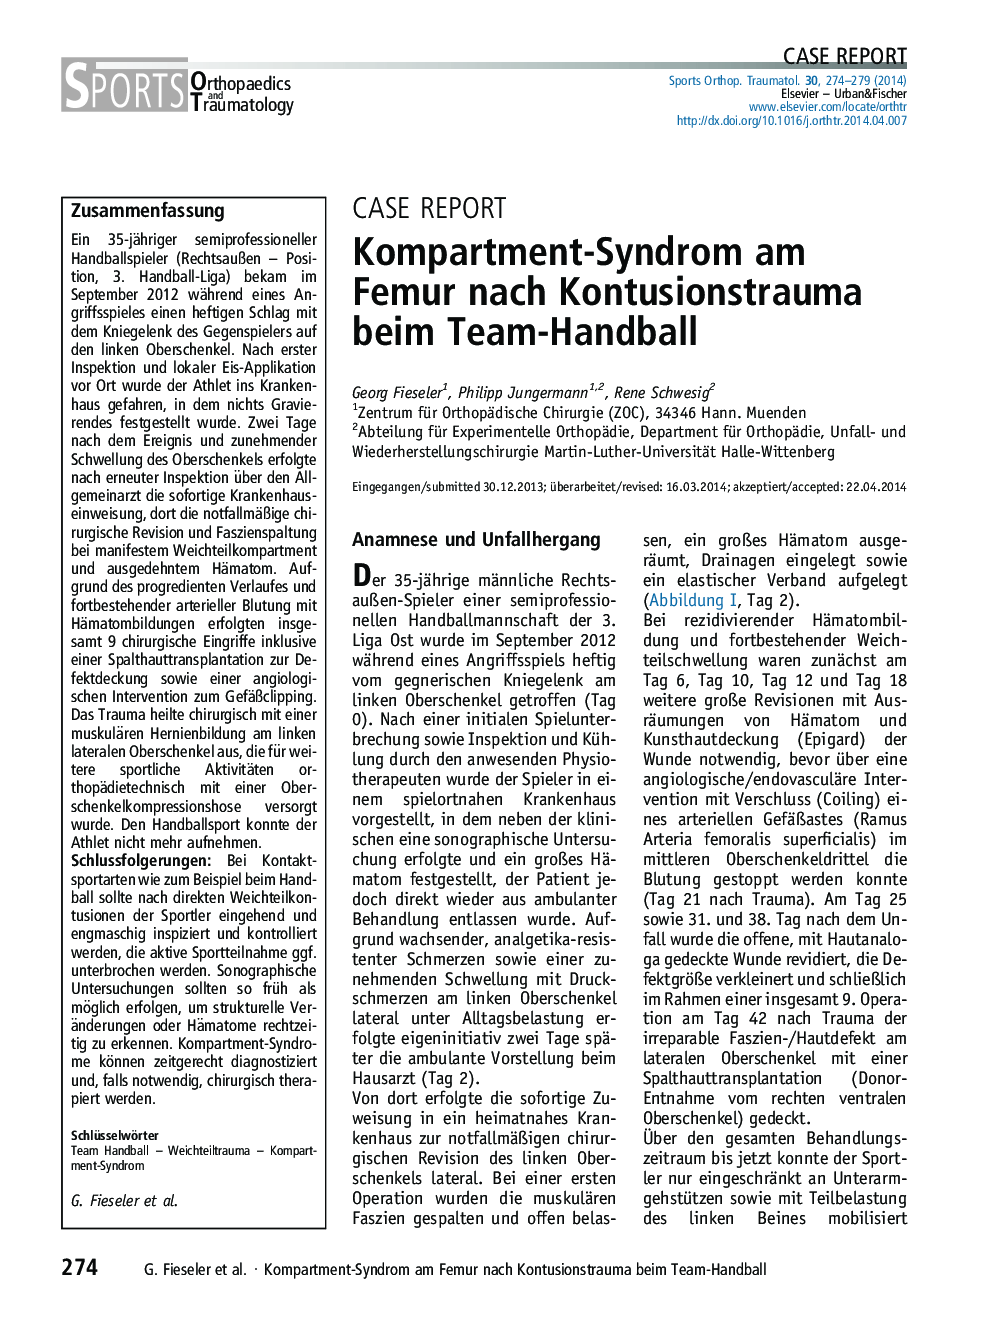 Kompartment-Syndrom am Femur nach Kontusionstrauma beim Team-Handball